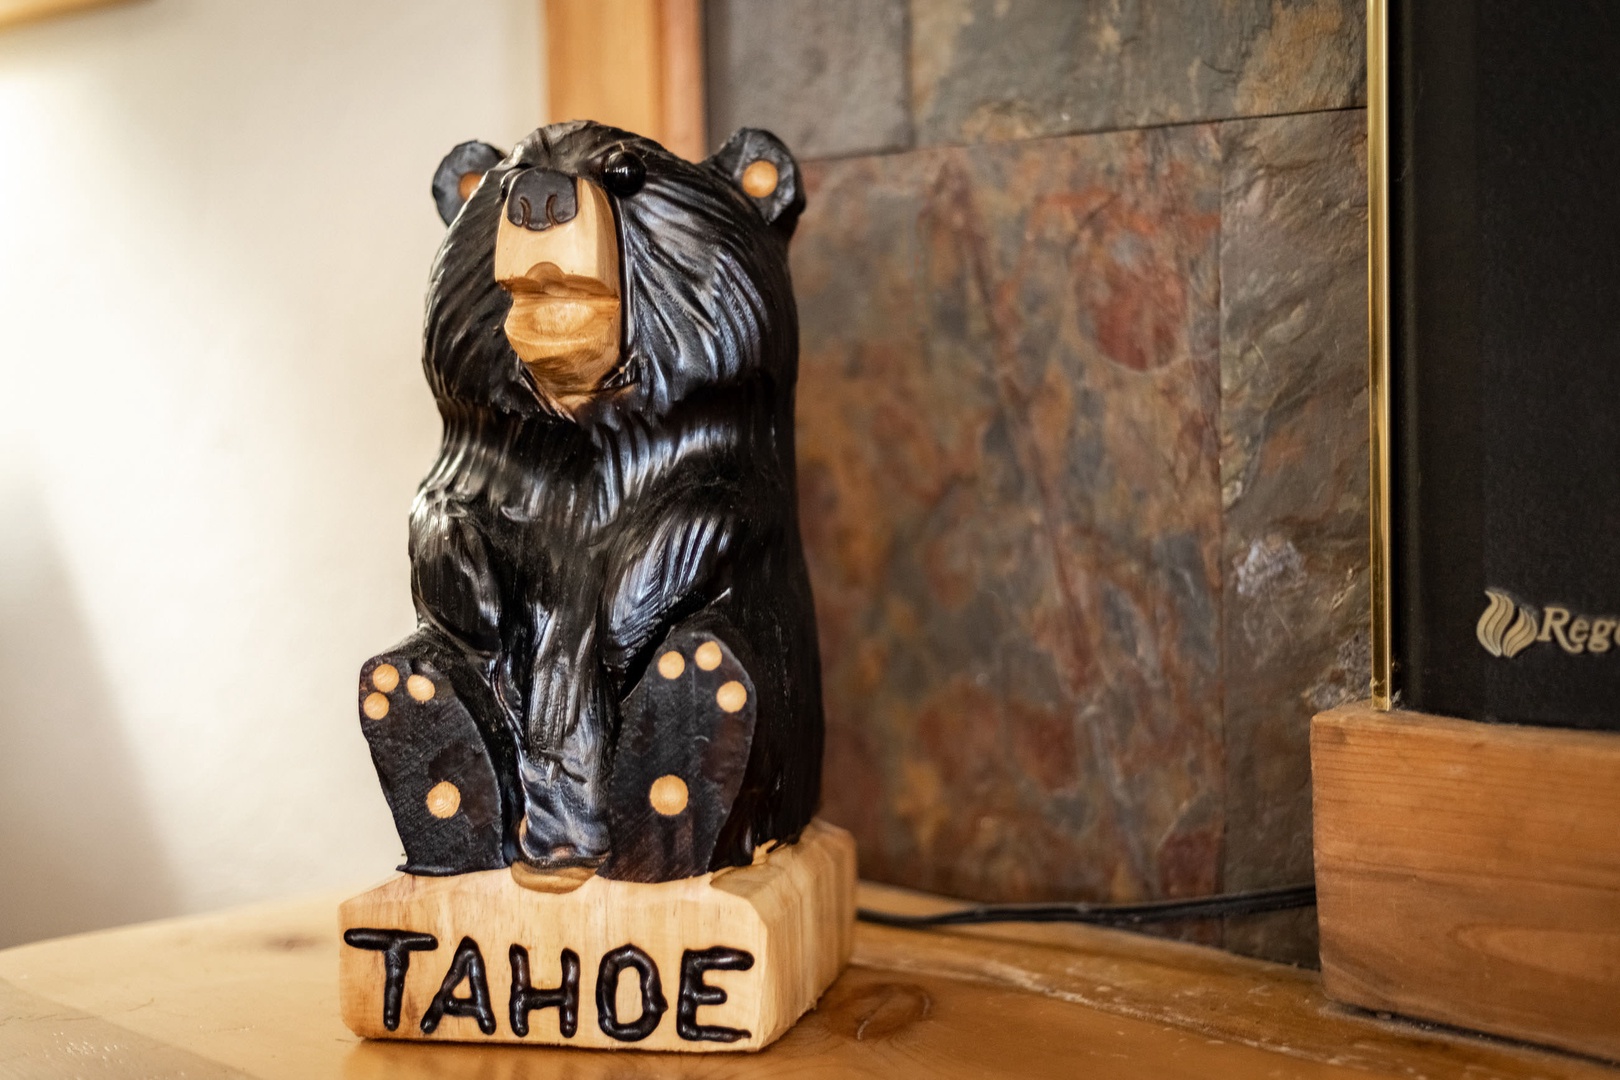 Tahoe bear decor by fireplace